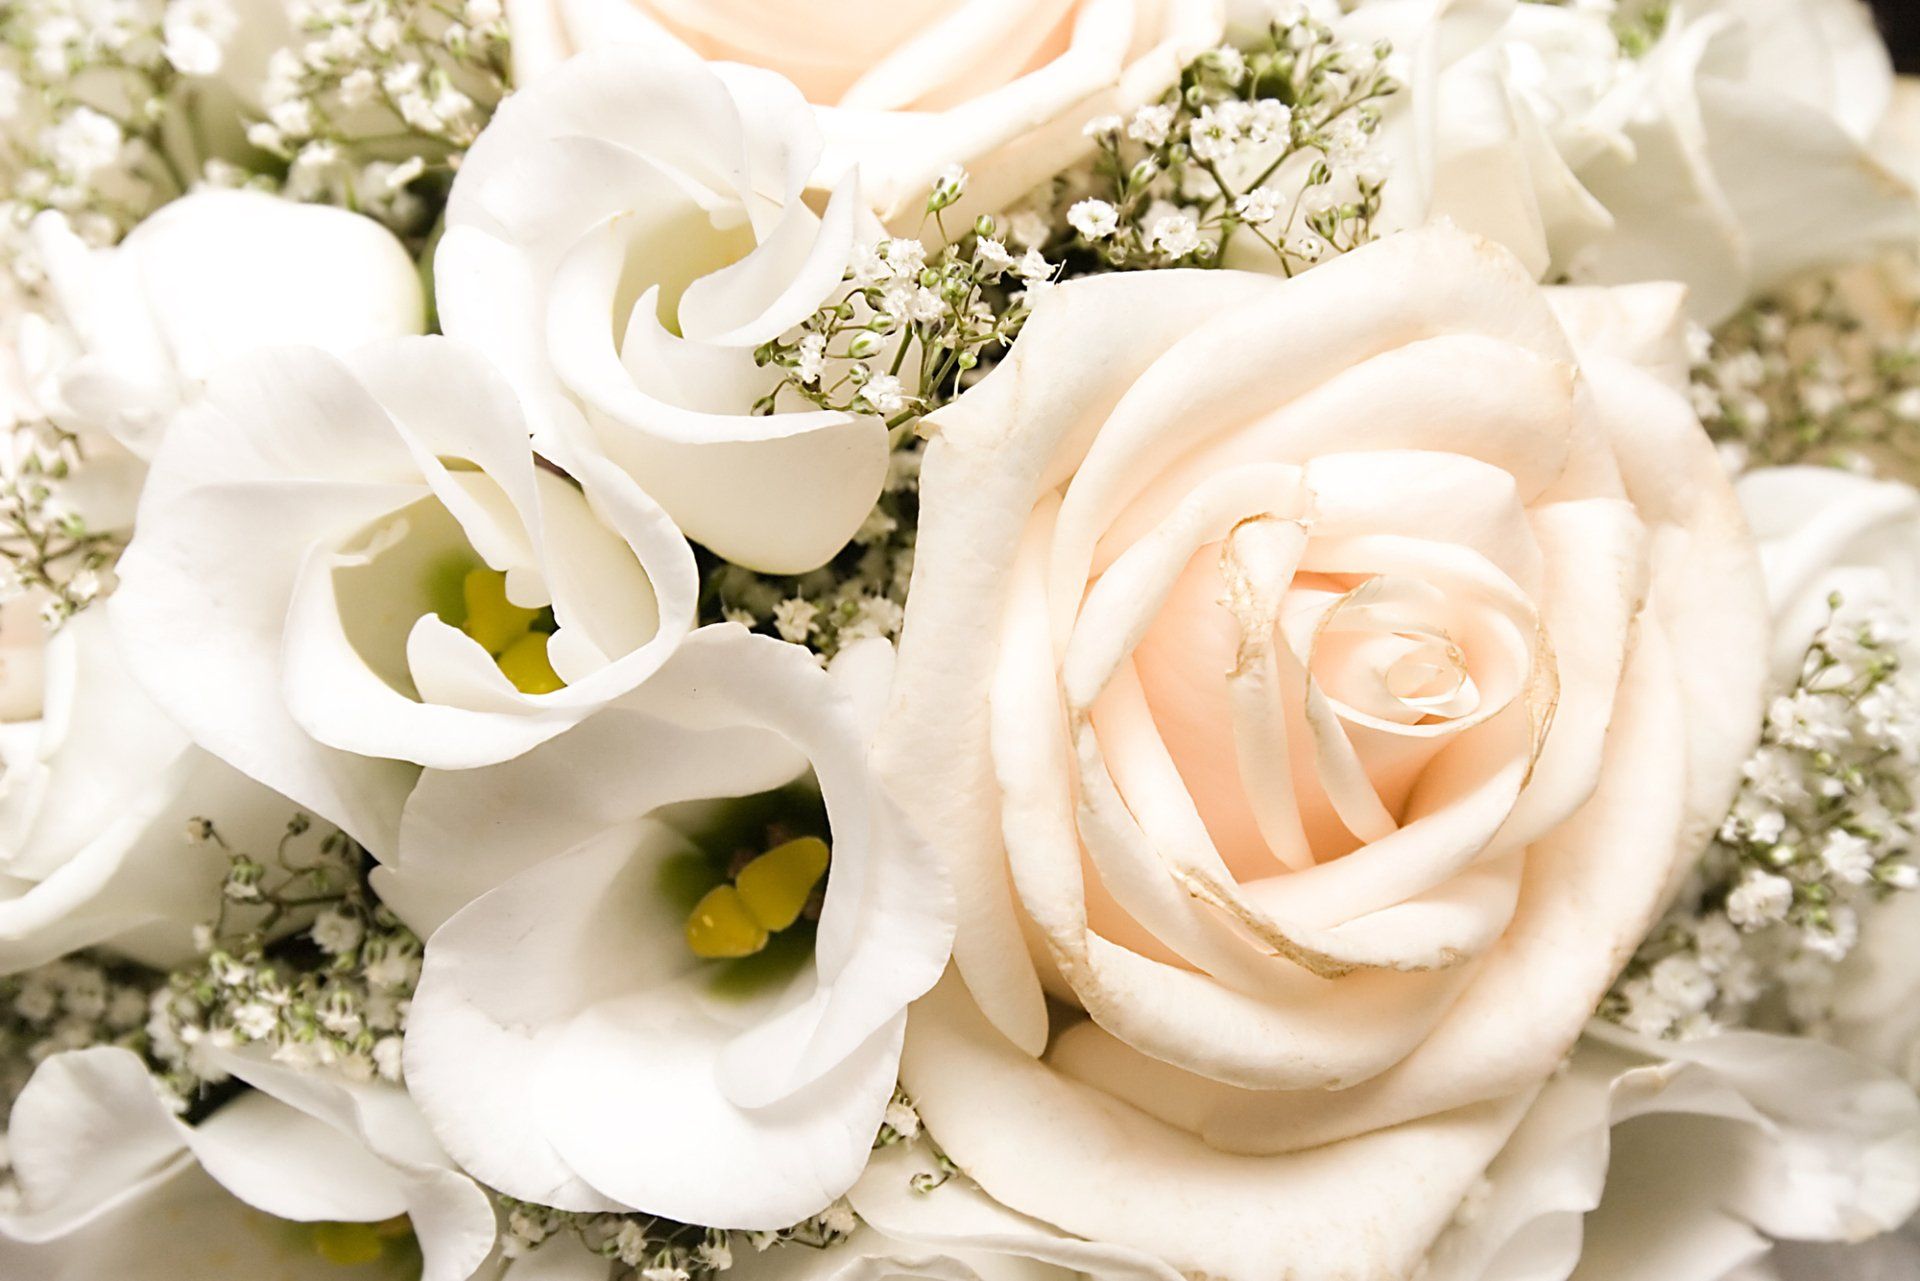 Funeral Flower Arrangements in Hanford, CA | Divine Creations Floral Arrangements and Events